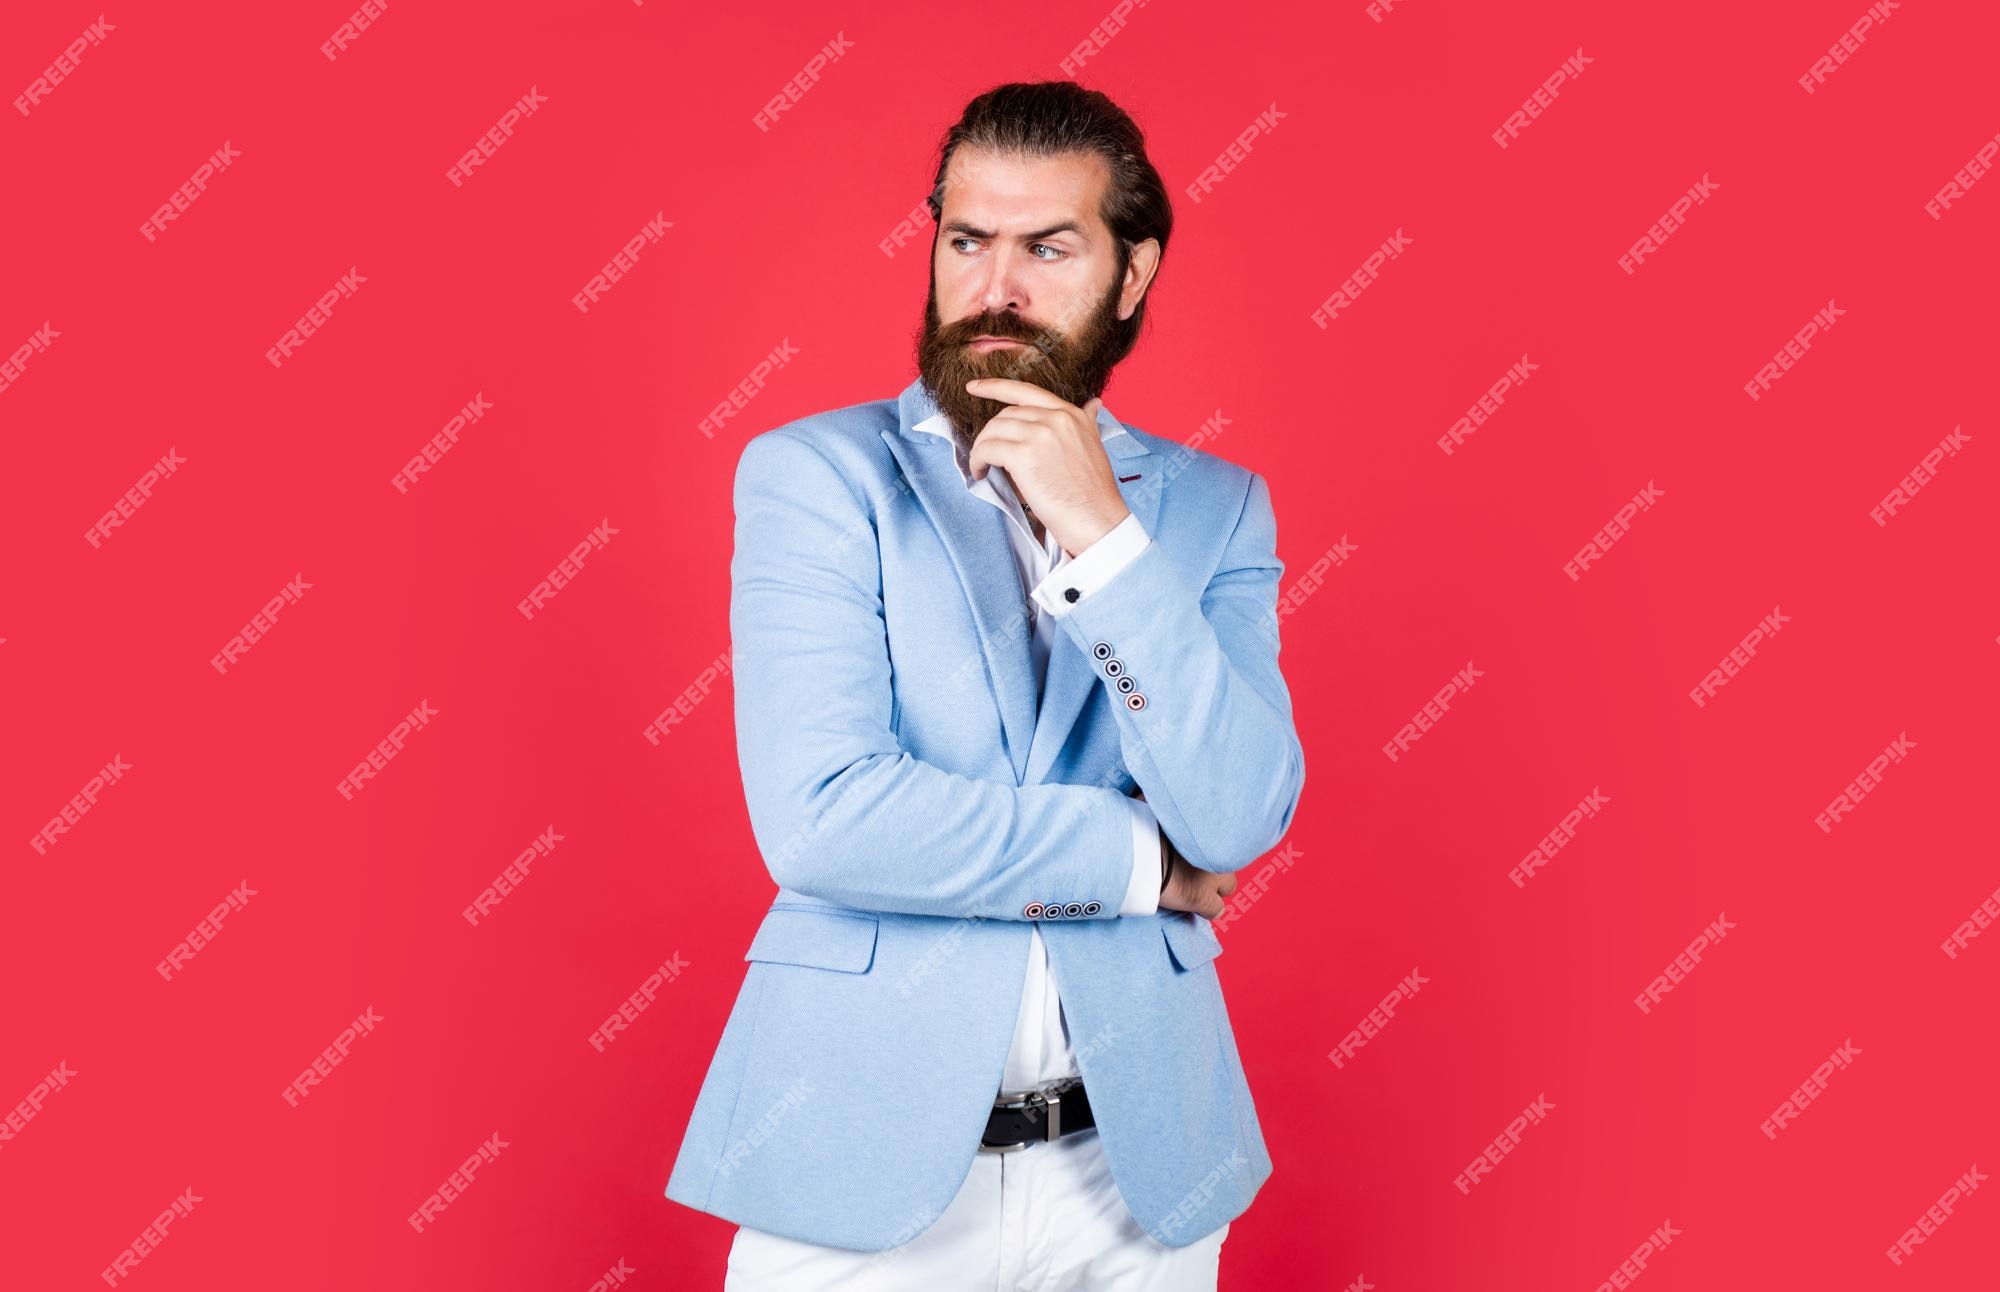 Hombre barbudo en ropa formal elegante hombre de negocios usa ropa elegante para evento verdadero caballero con cabello arreglado belleza masculina y concepto barbería de moda | Foto Premium